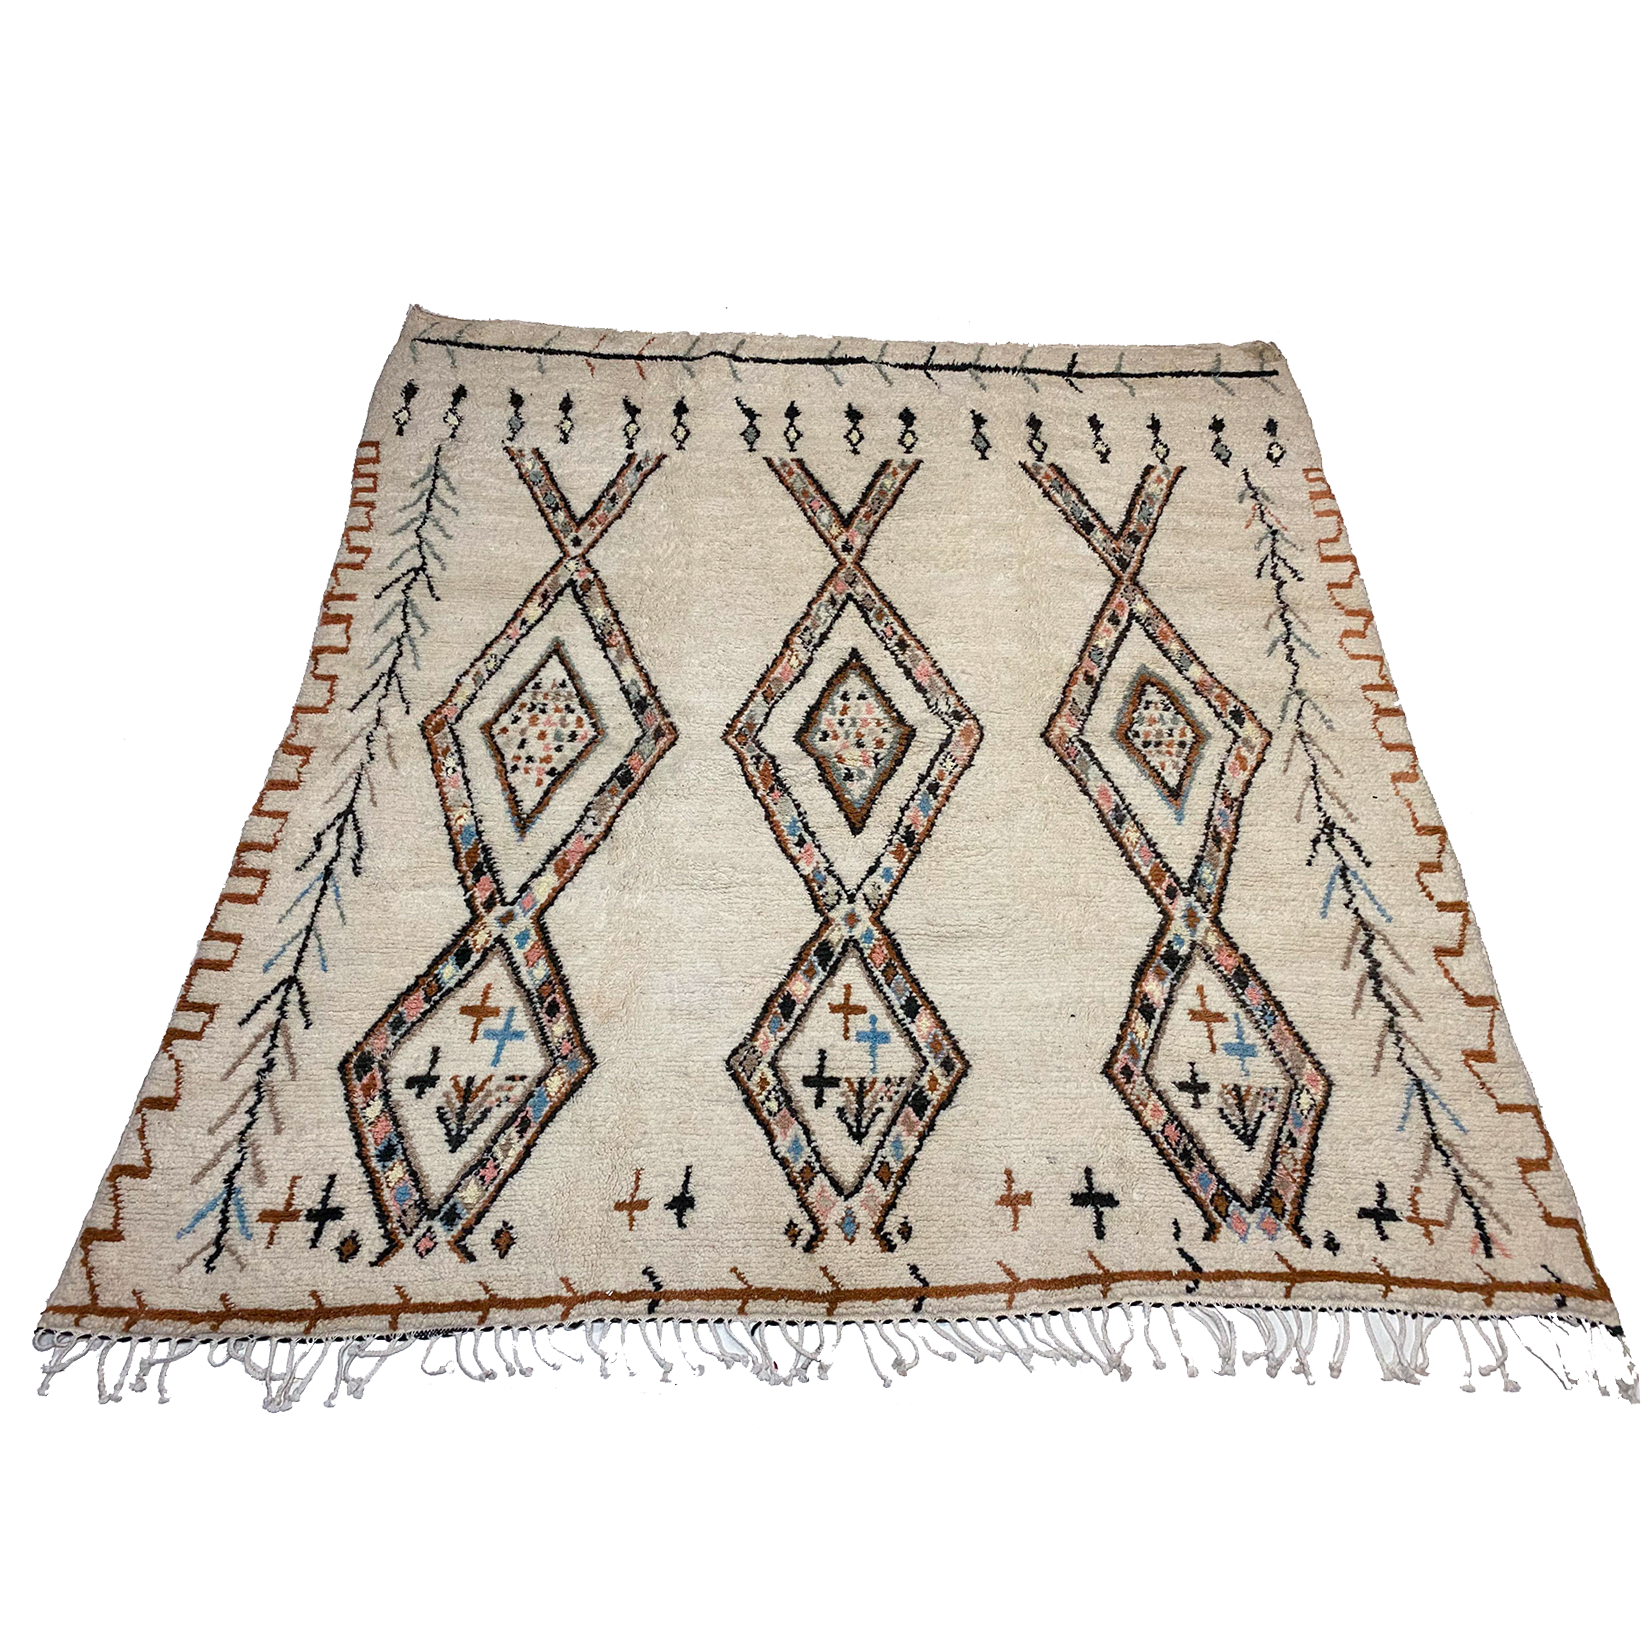 Large cream colored Moroccan area rug with diamond motifs - Kantara | Moroccan Rugs